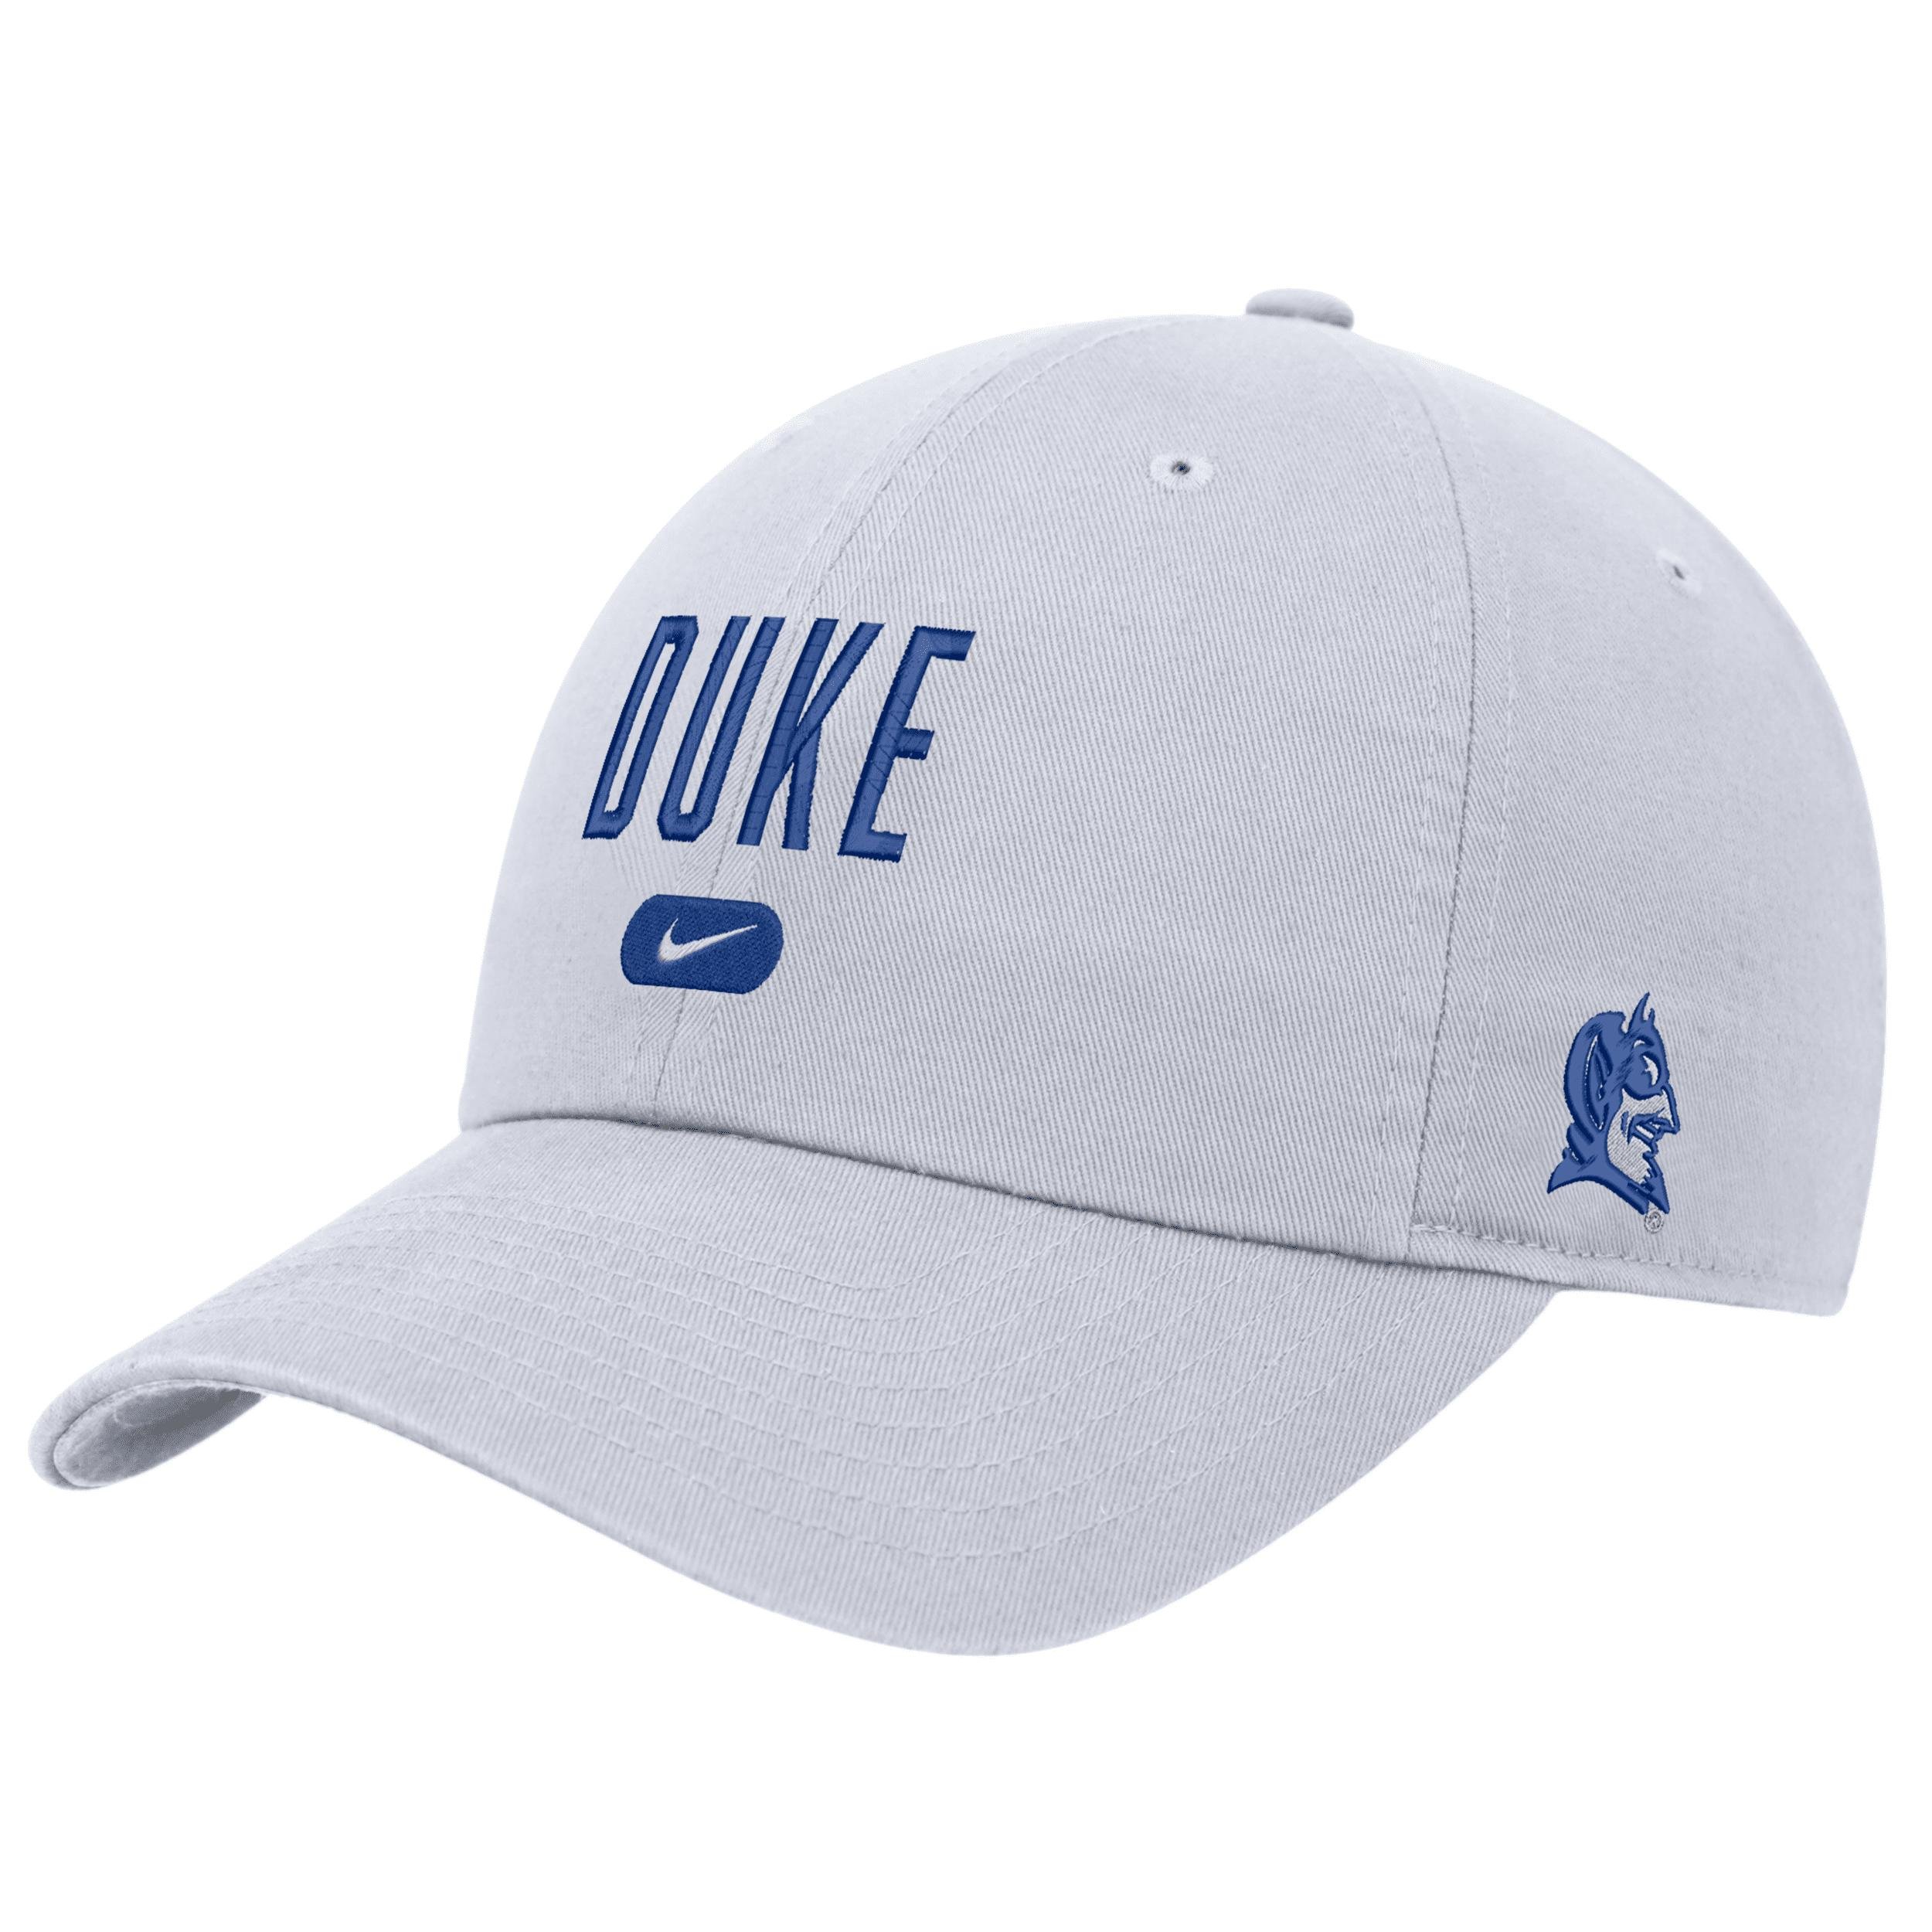 Duke Nike Unisex College Campus Cap by NIKE